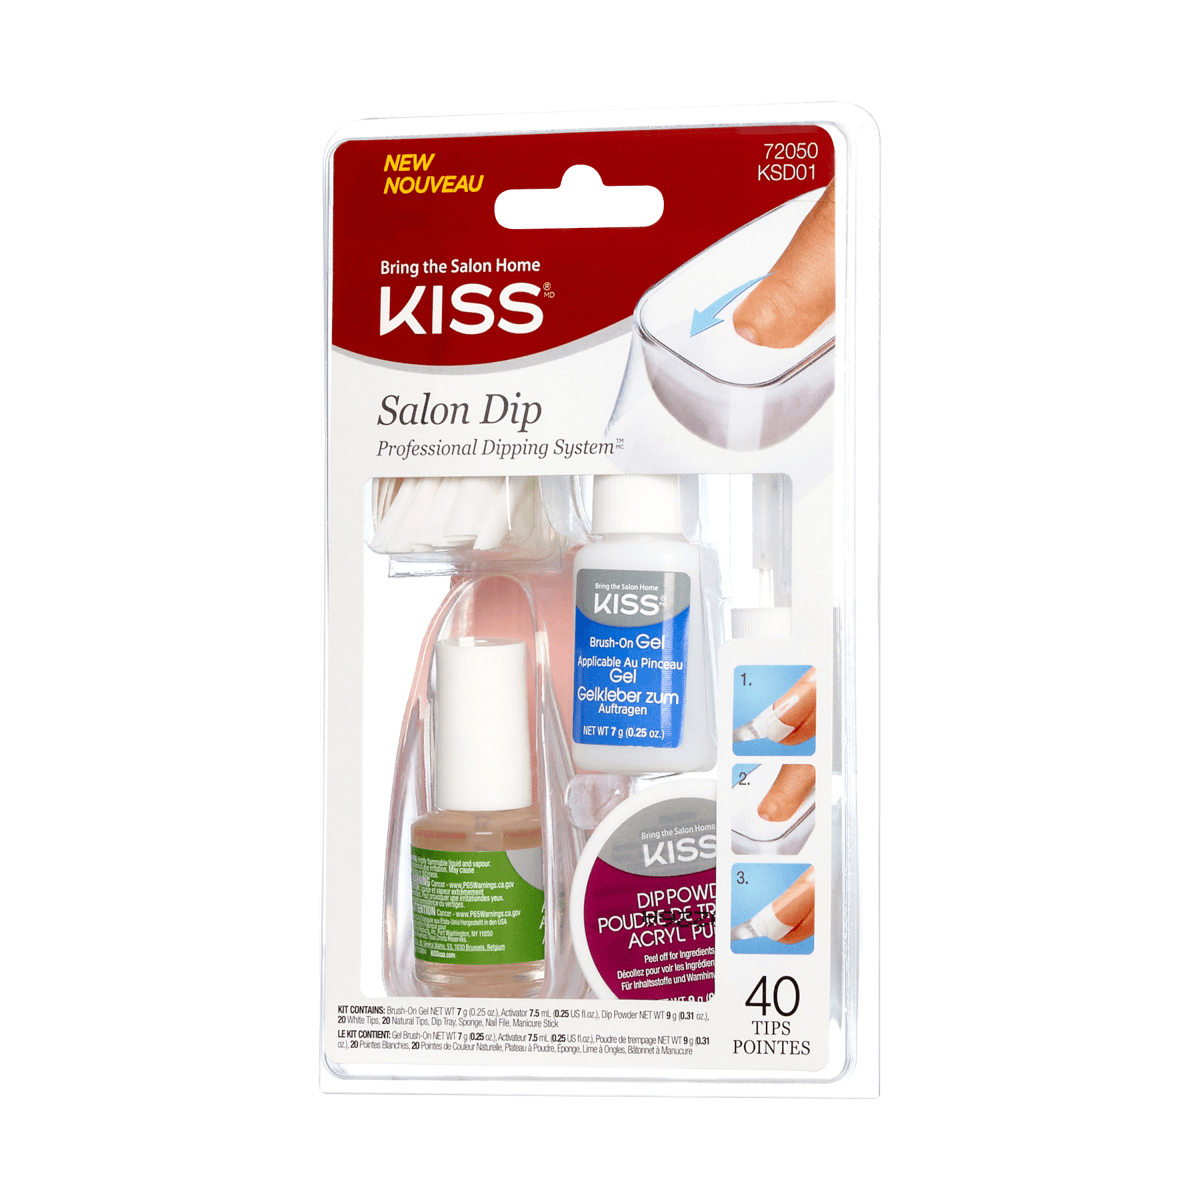 KISS Salon Dip